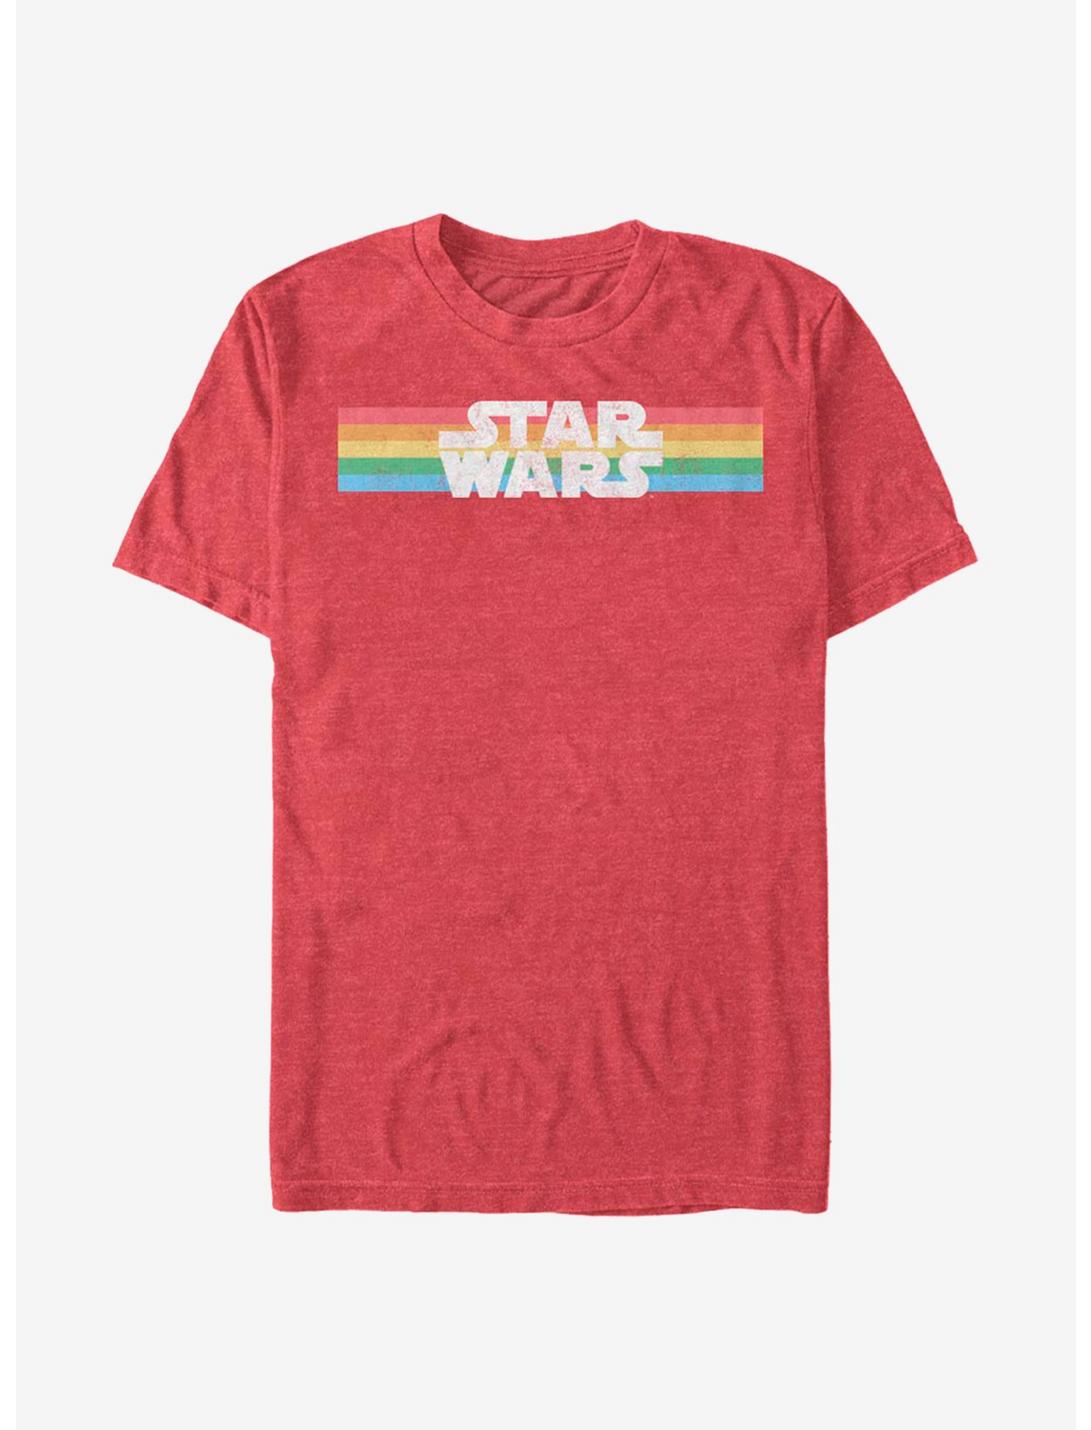 Star Wars Rainbow T-Shirt, RED HTR, hi-res